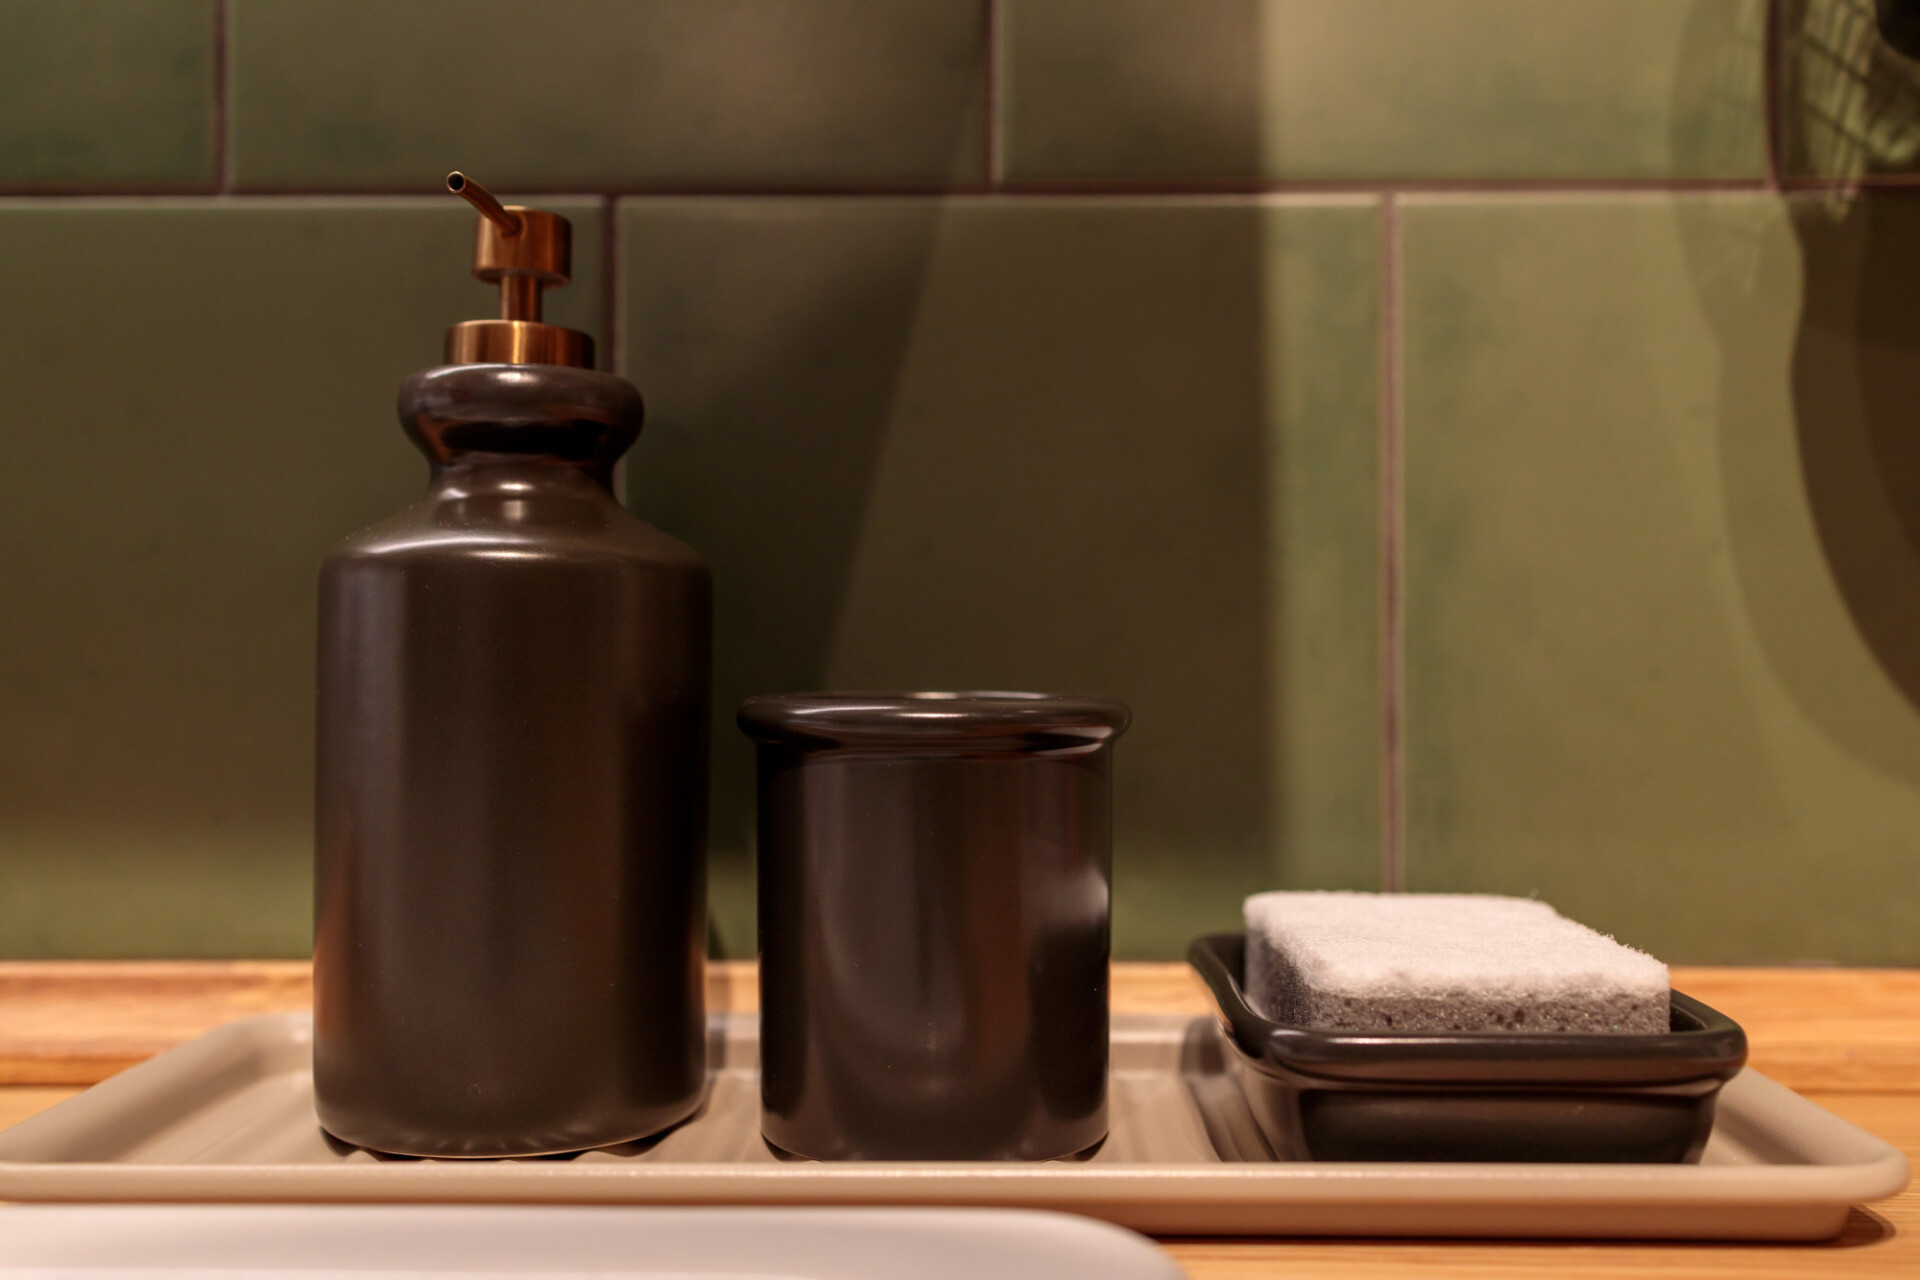 Soap dispenser and sponge in a bathroom